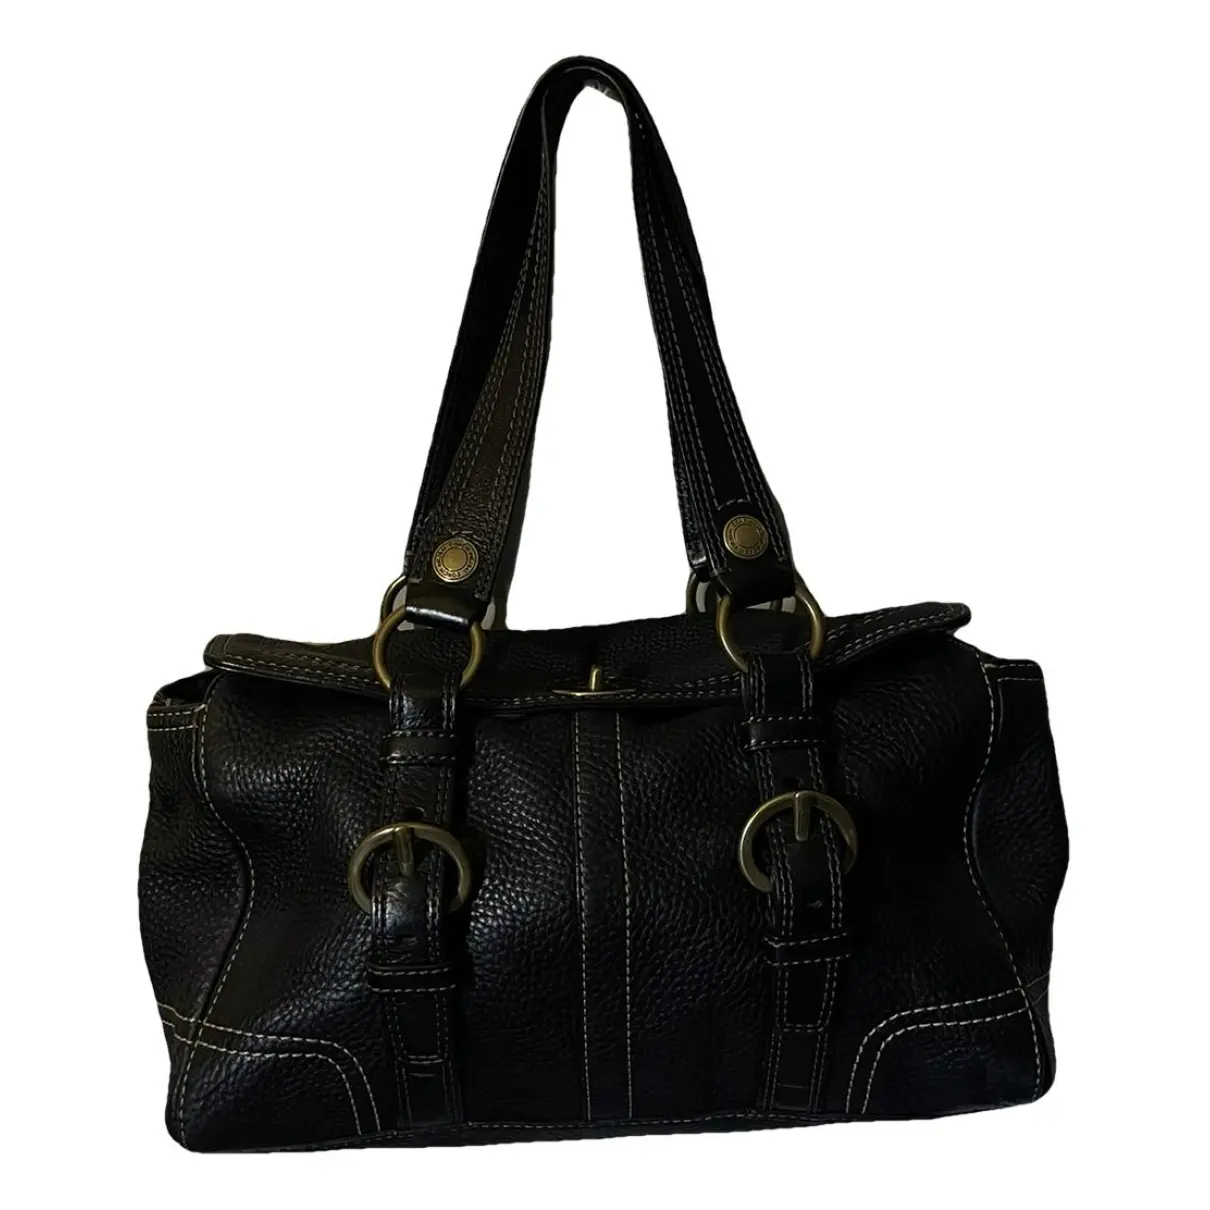 Madison leather handbag